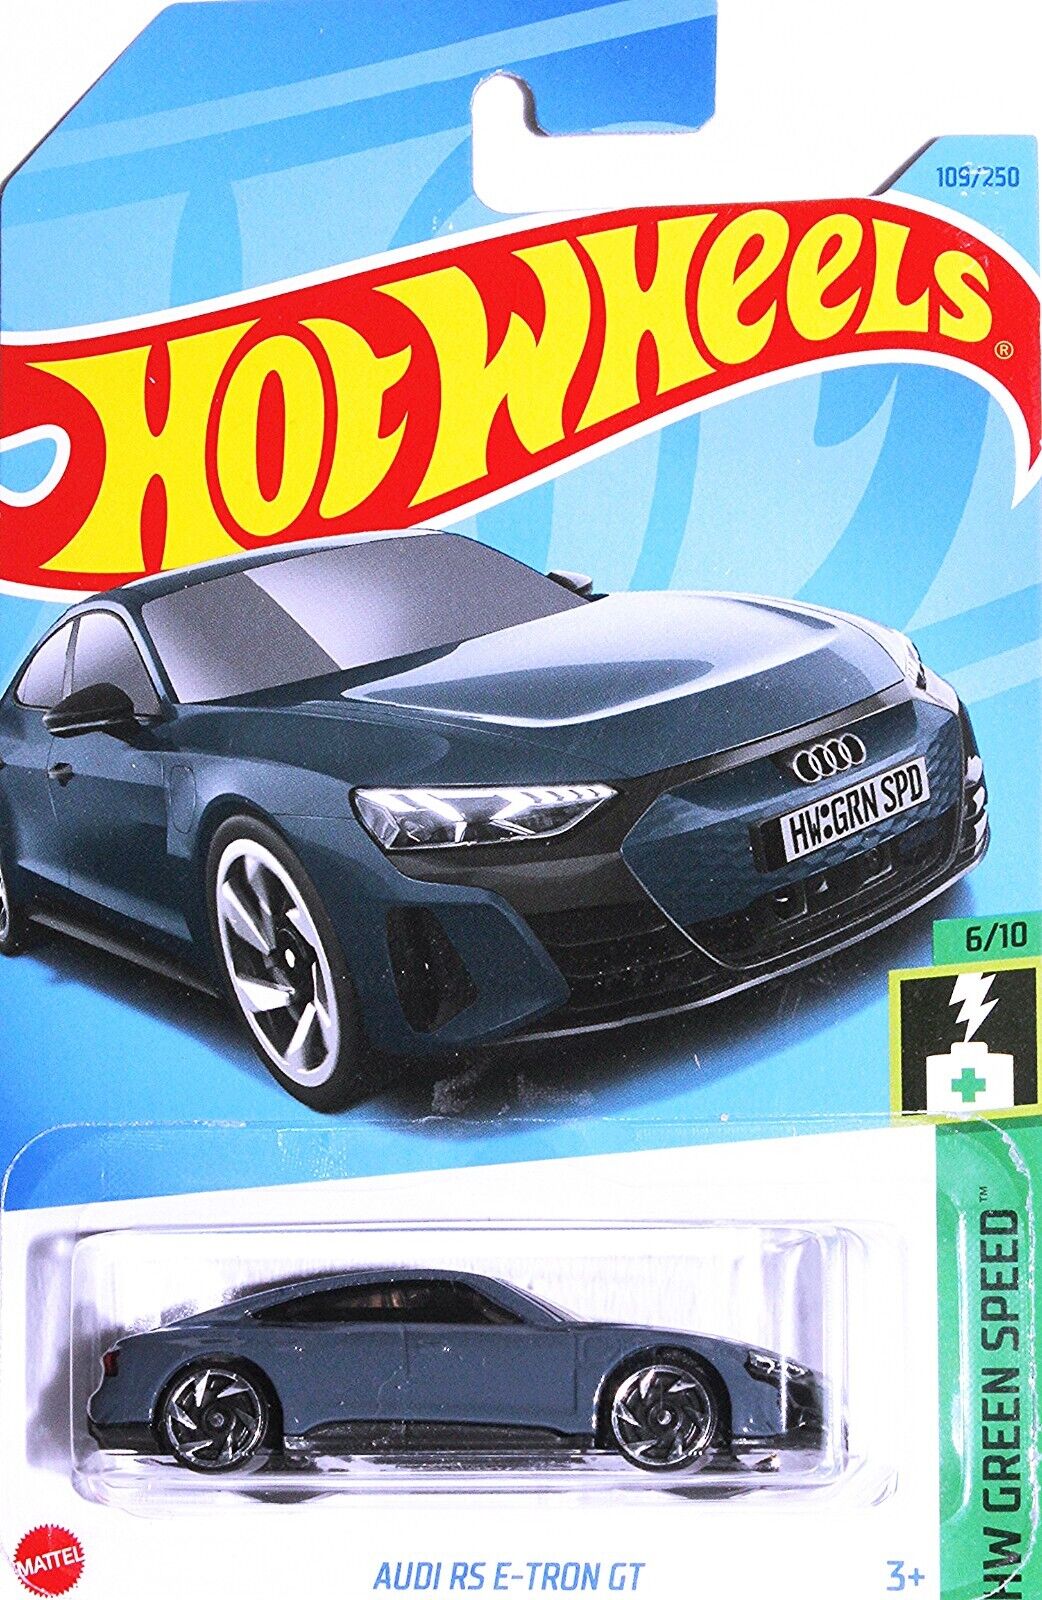 Hot Wheels Audi RS E-Tron GT HW Green Speed 6/10 109/250